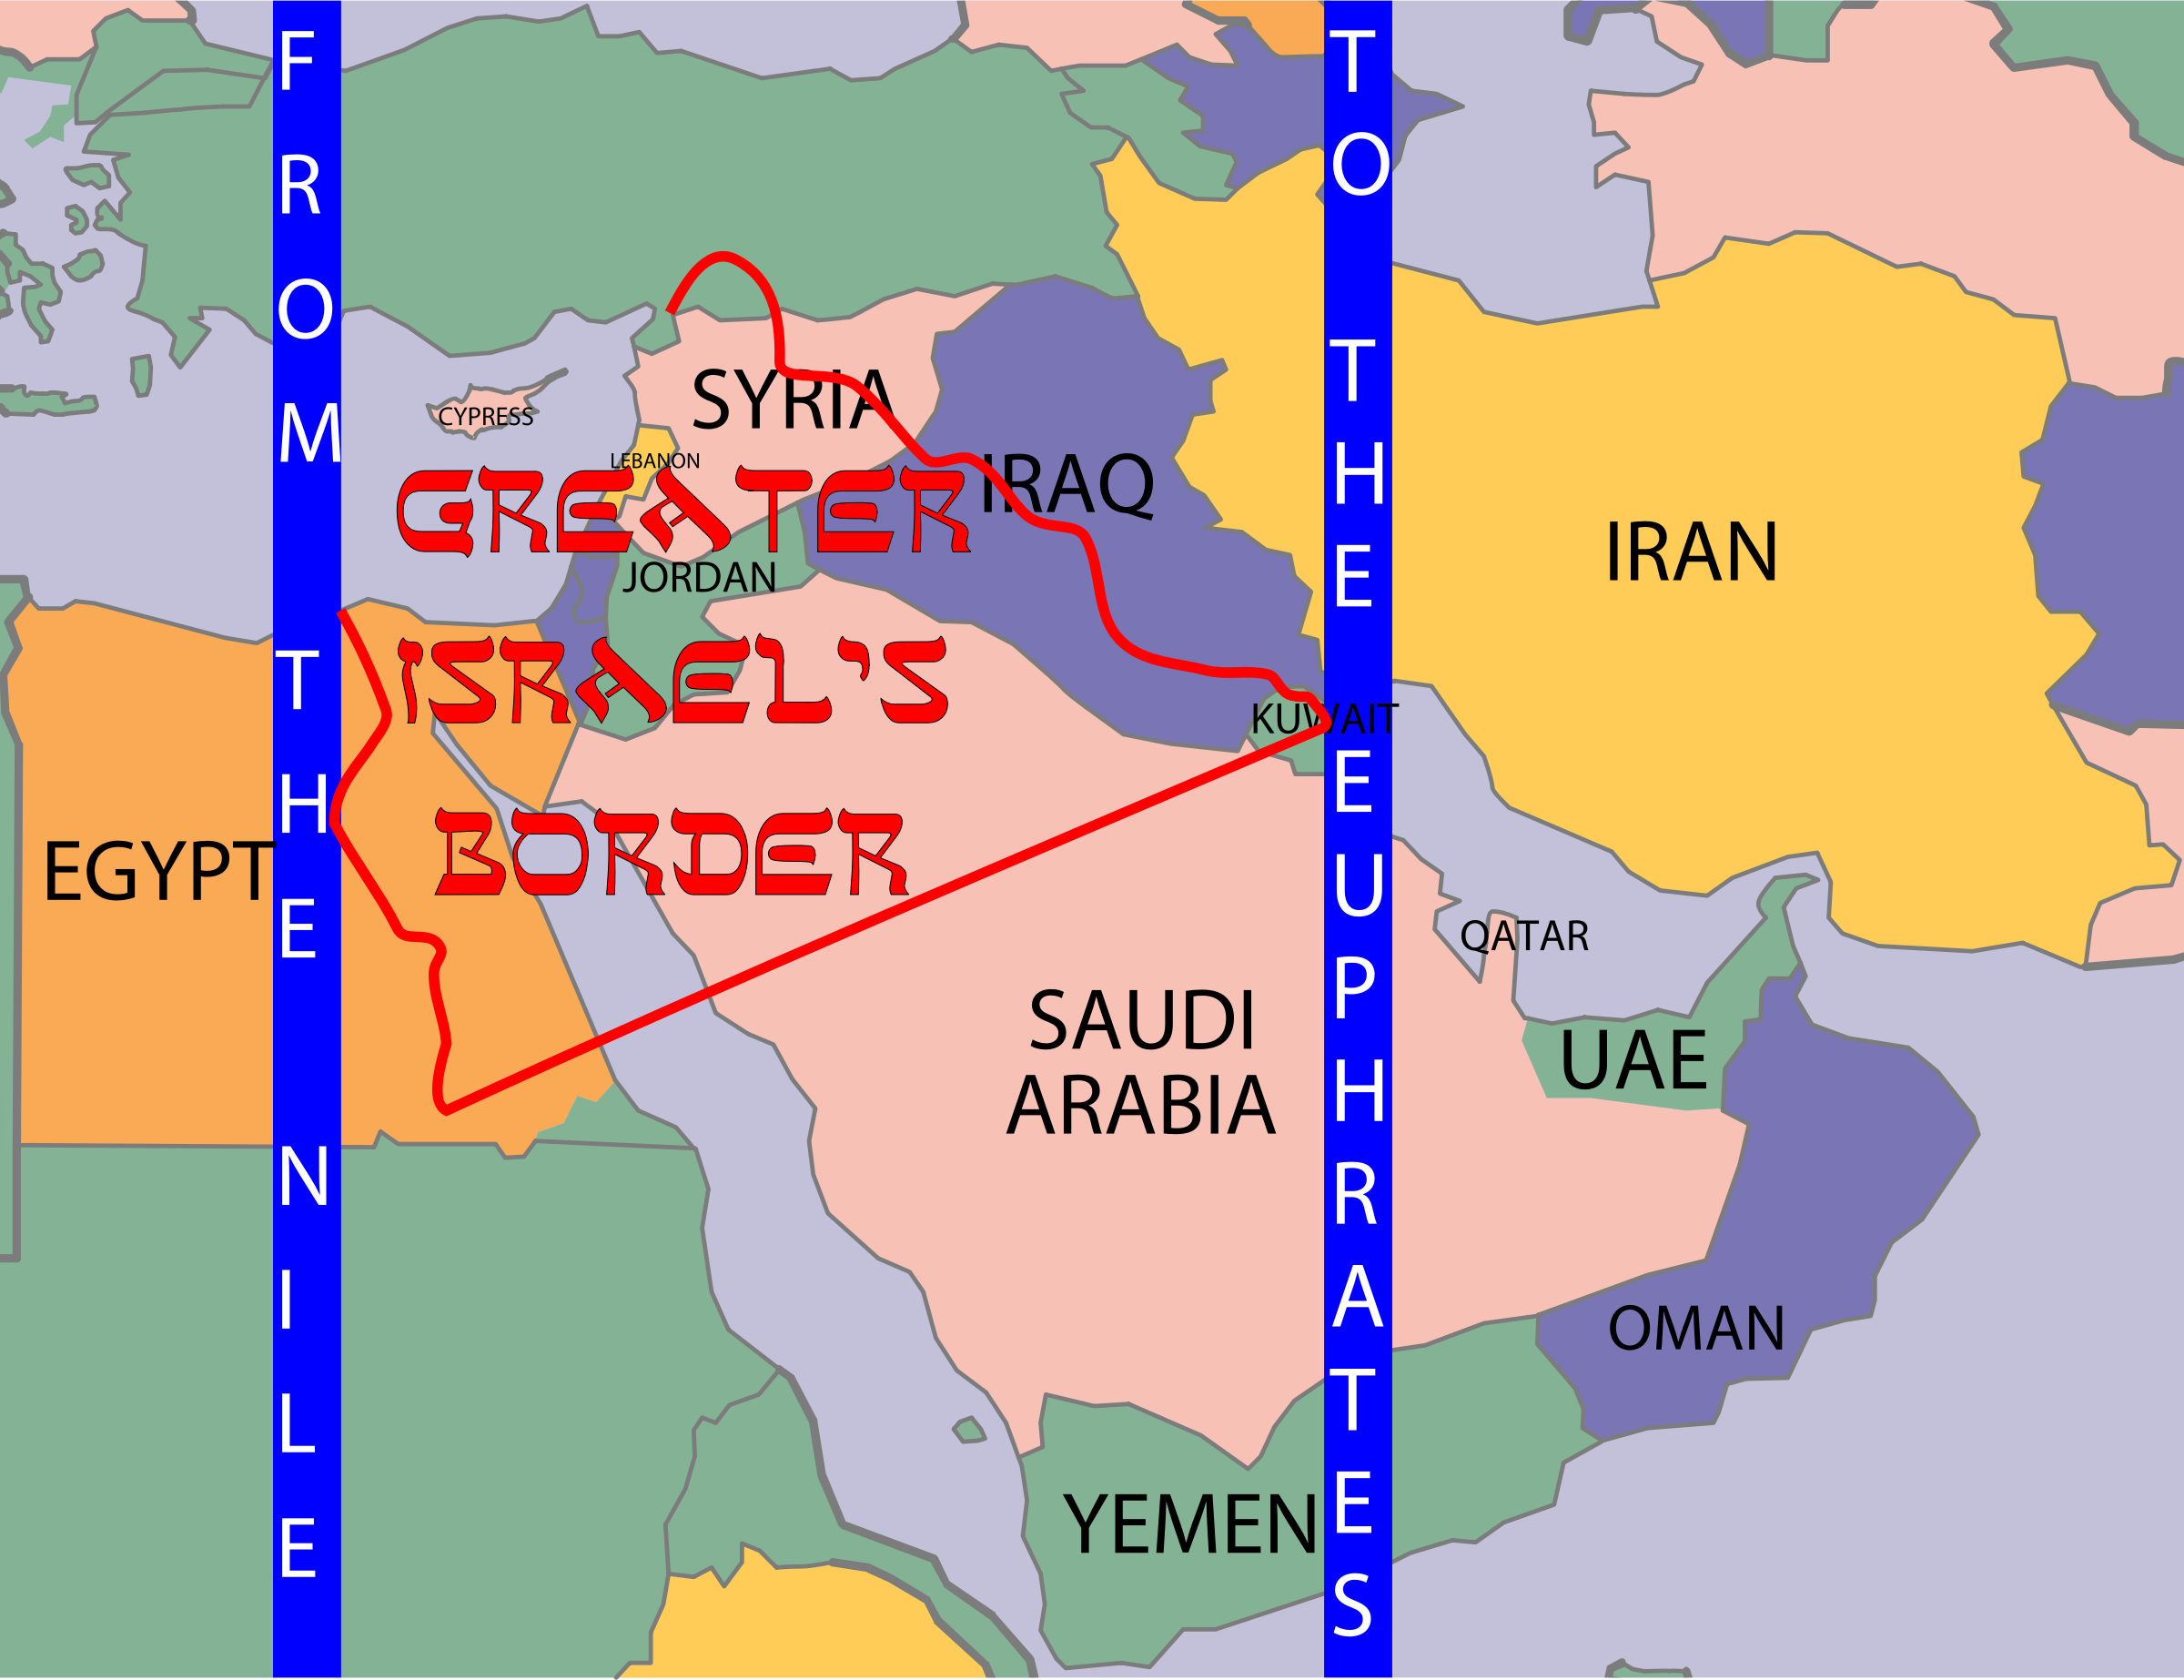 eretz-israel-greater-israel-borders-map.